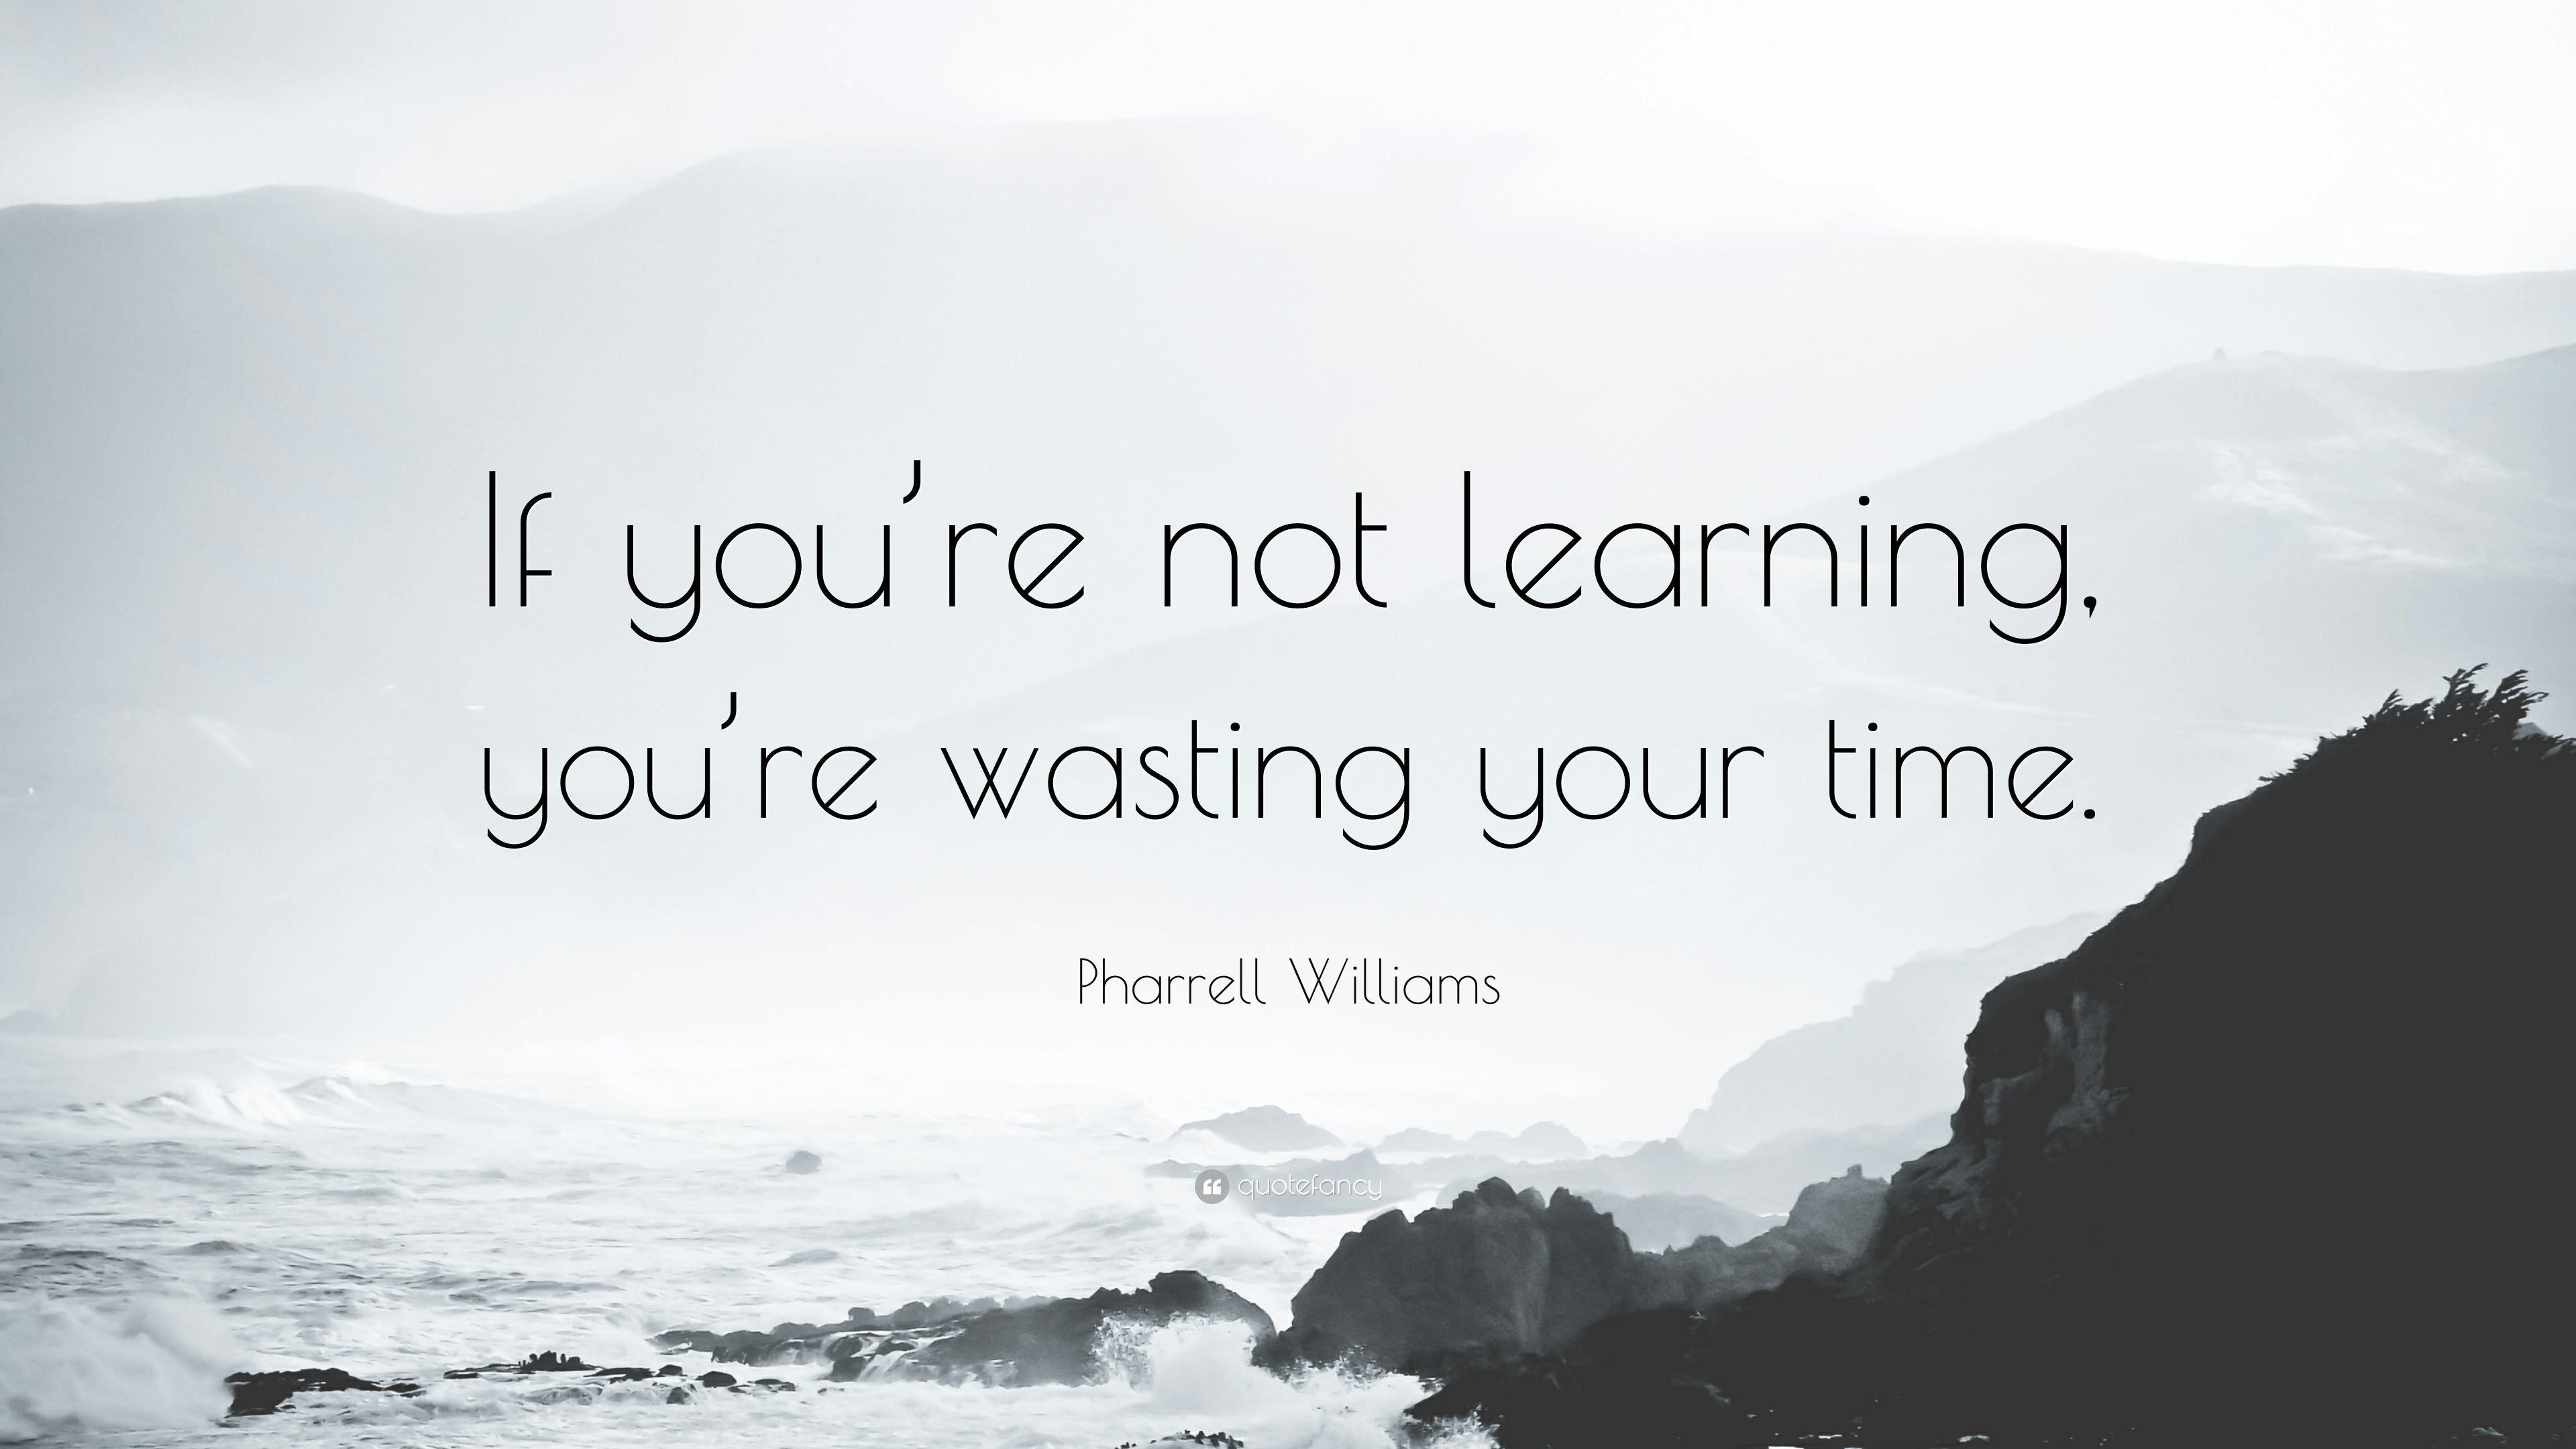 6 Inspirational Pharrell Williams Quotes